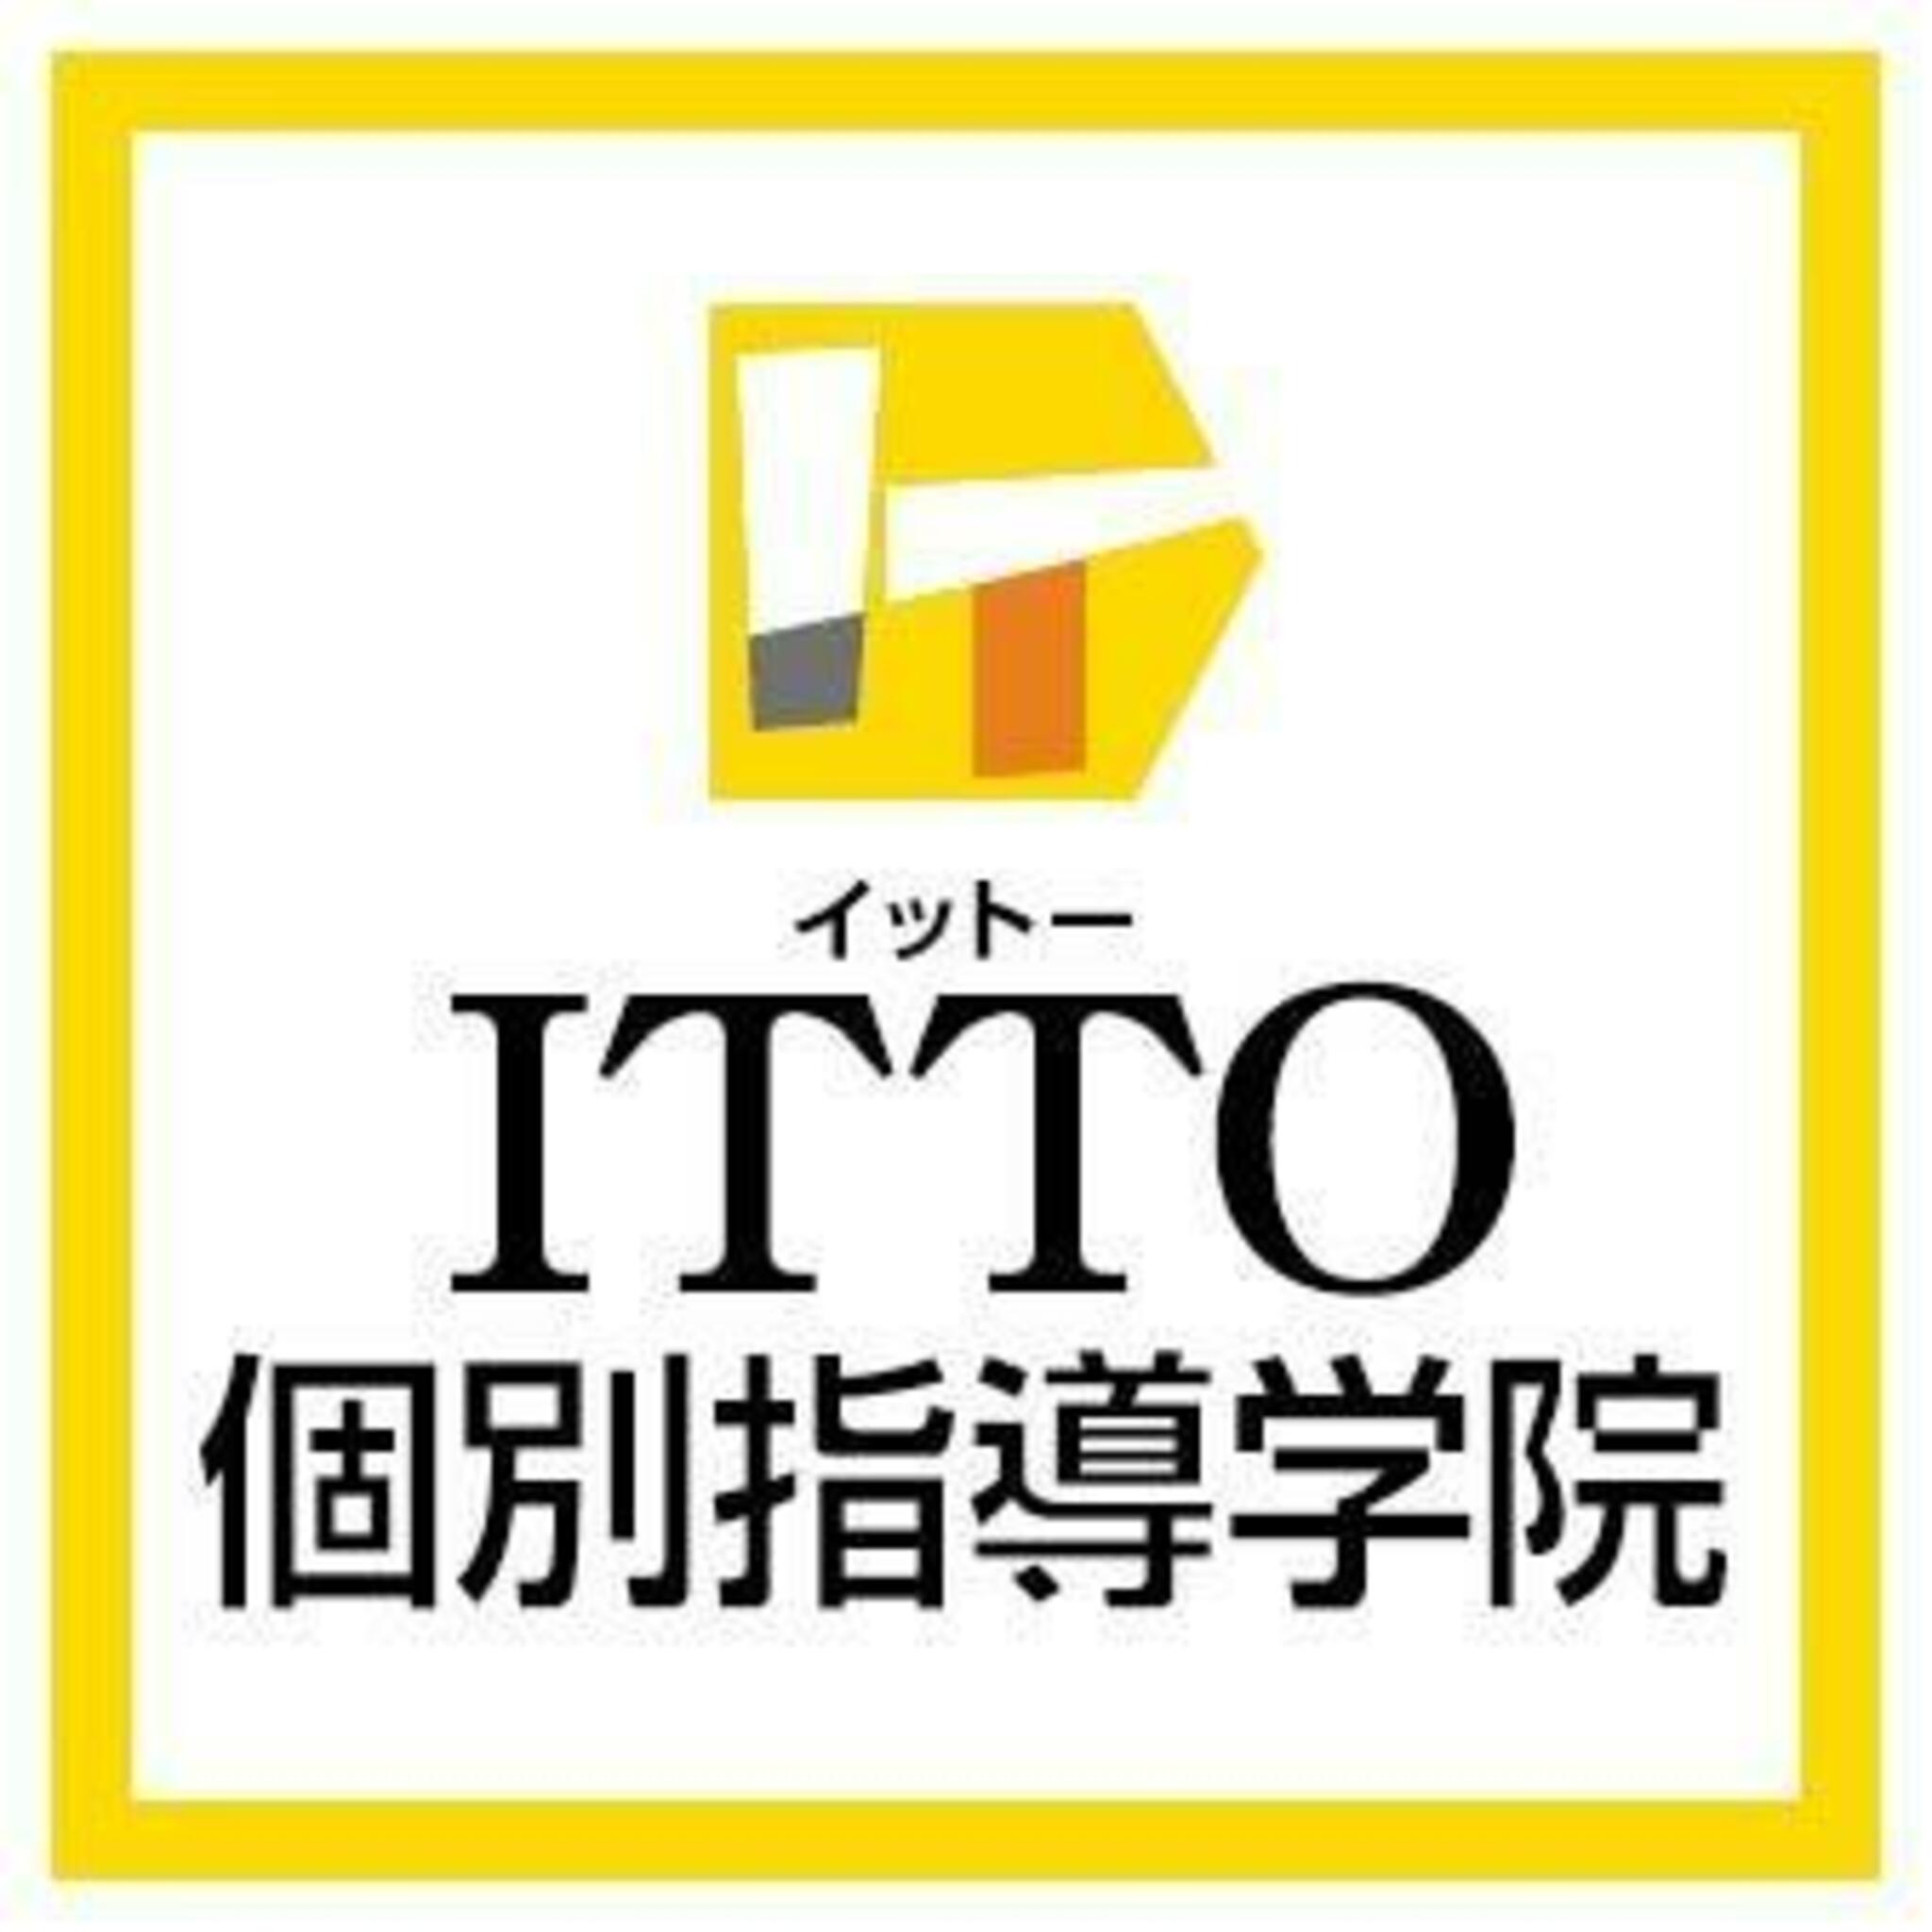 ITTO個別指導学院 庄内通校の代表写真9